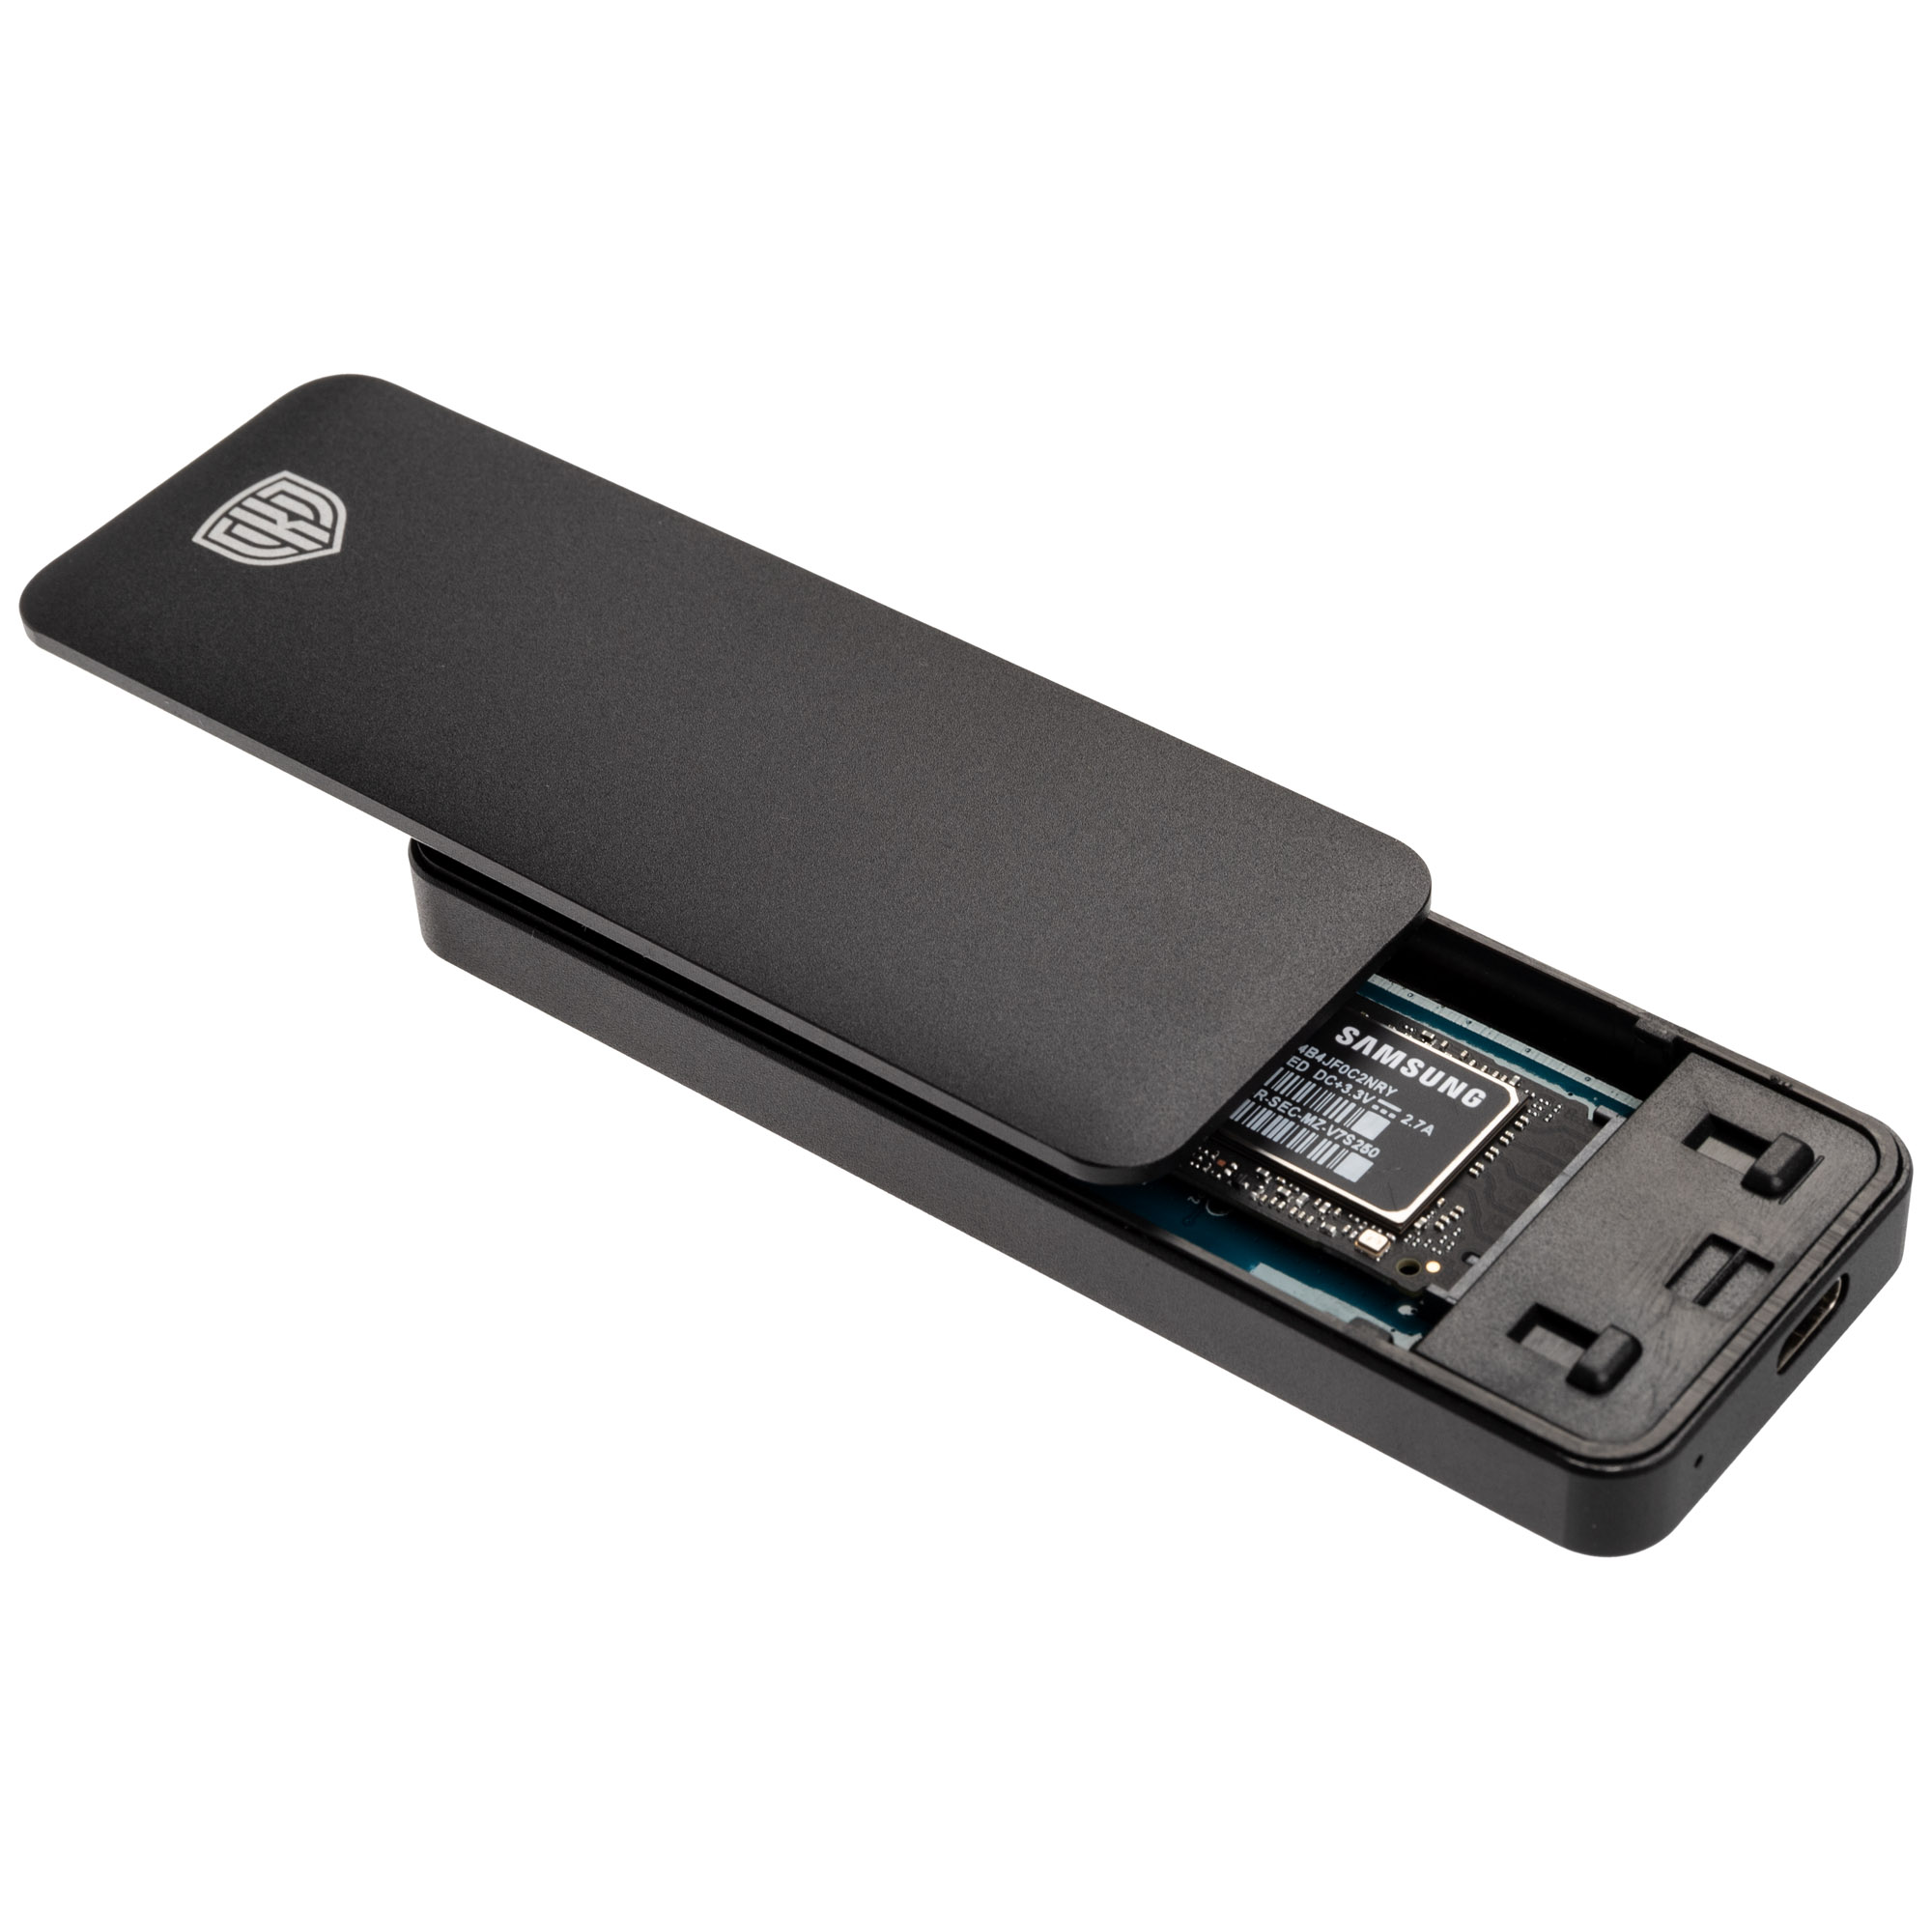 SSD enclosure Kolink M.2 NVMe USB 3.1 Type C Black